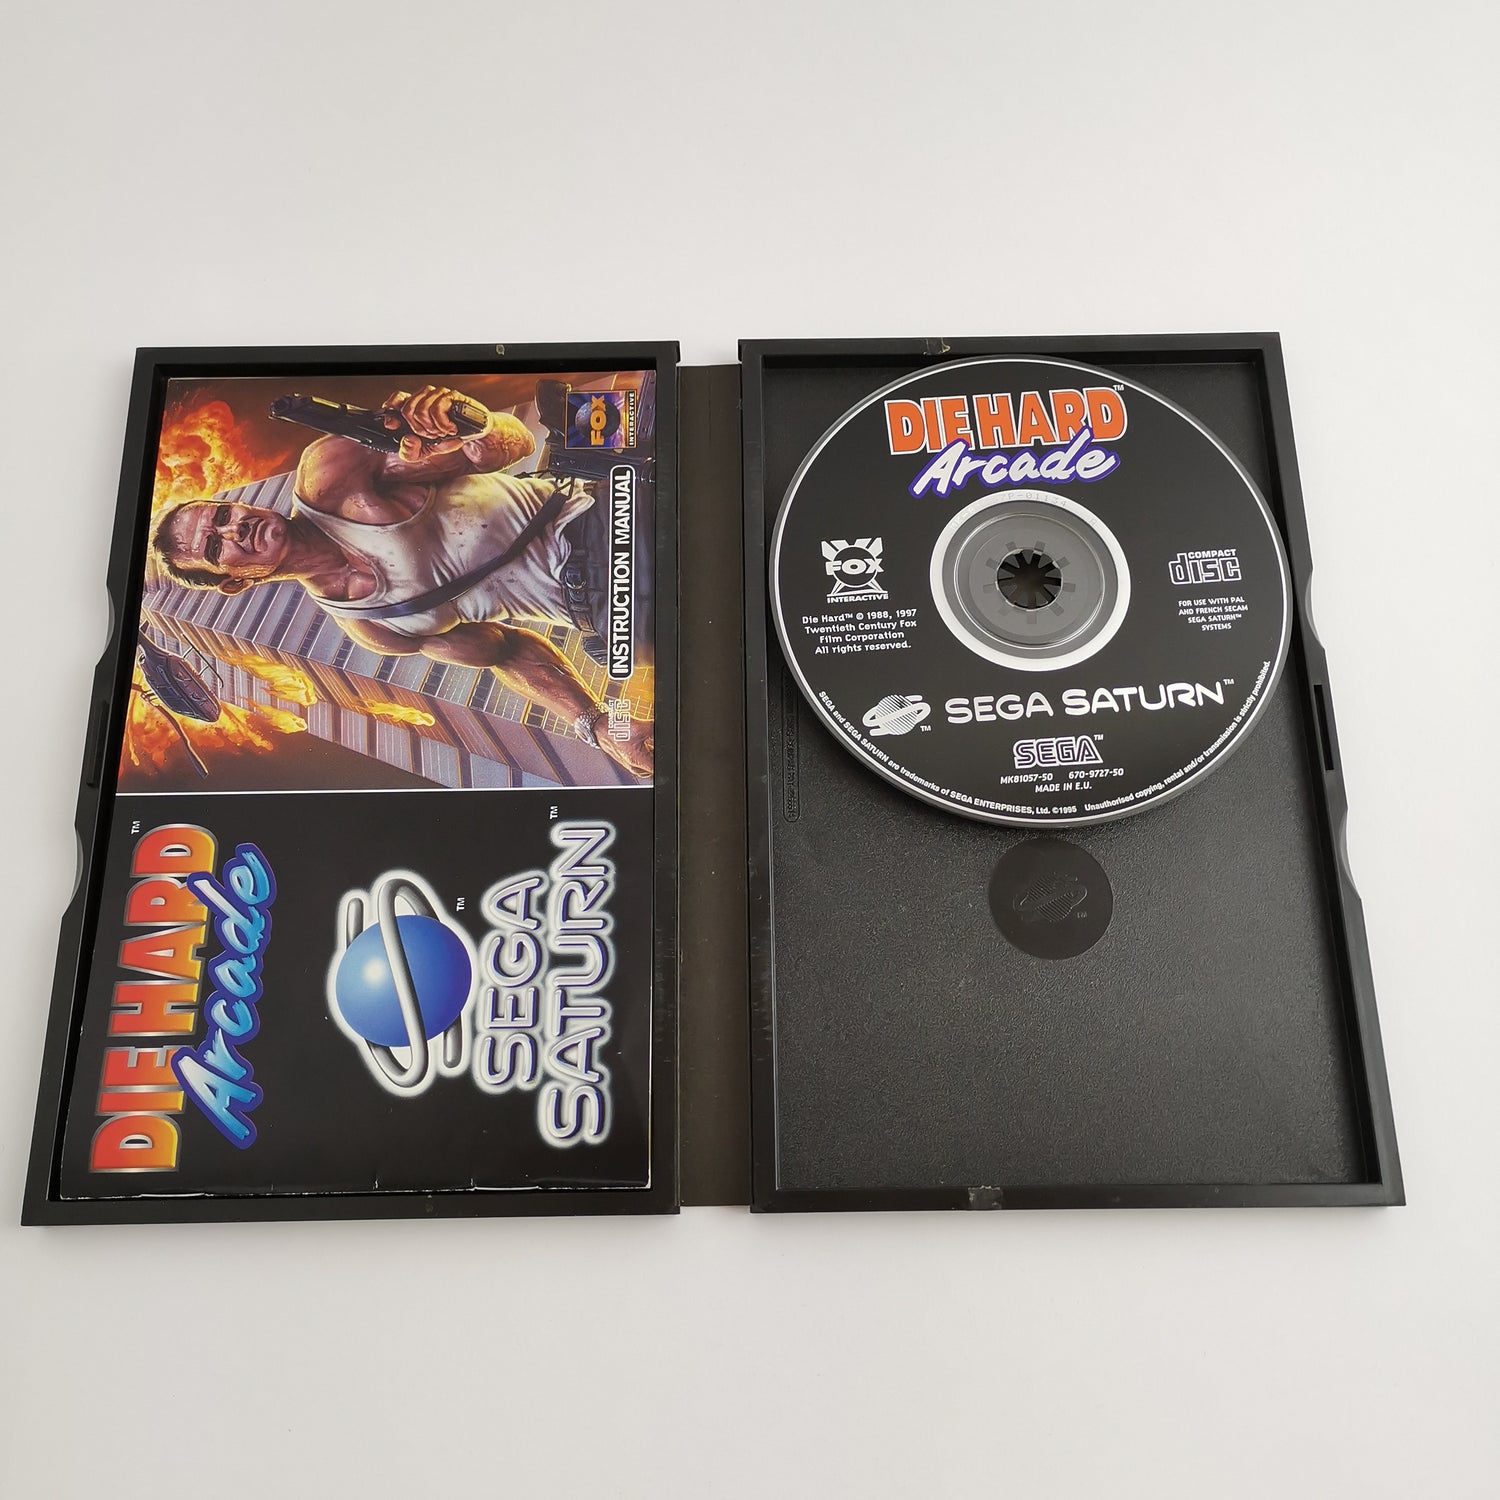 Sega Saturn Game: Die Hard Arcade - Original Packaging & Instructions | PAL version USK18